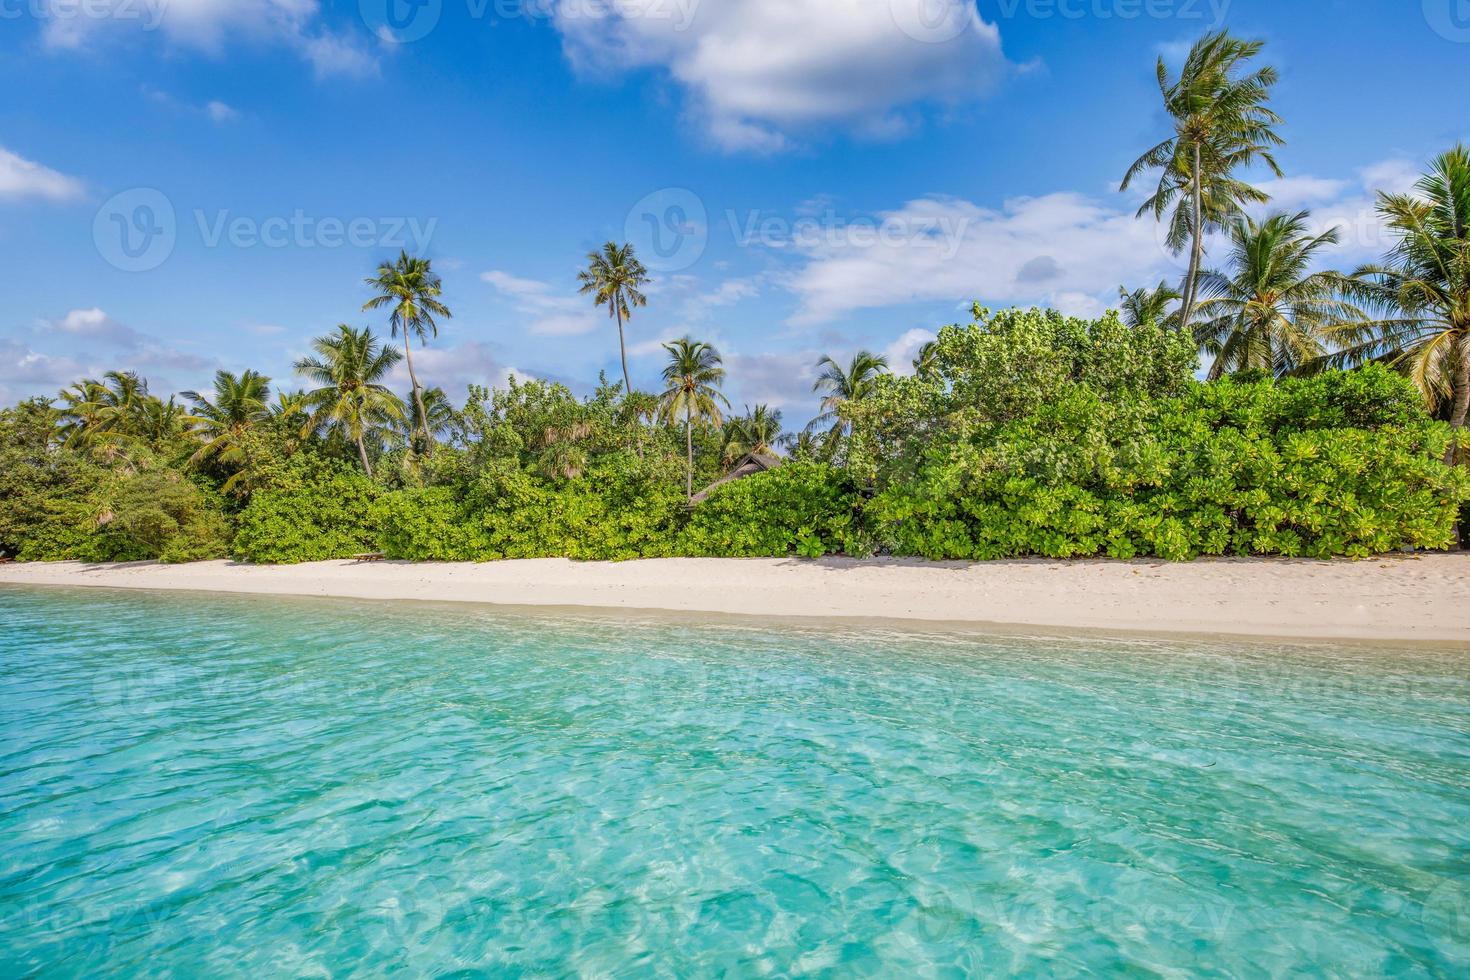 Maldiven eilanden oceaan tropisch strand. exotisch zee lagune, palm bomen over- wit zand. idyllisch natuur landschap. verbazingwekkend strand toneel- oever, helder tropisch zomer zon en blauw lucht met licht wolken foto